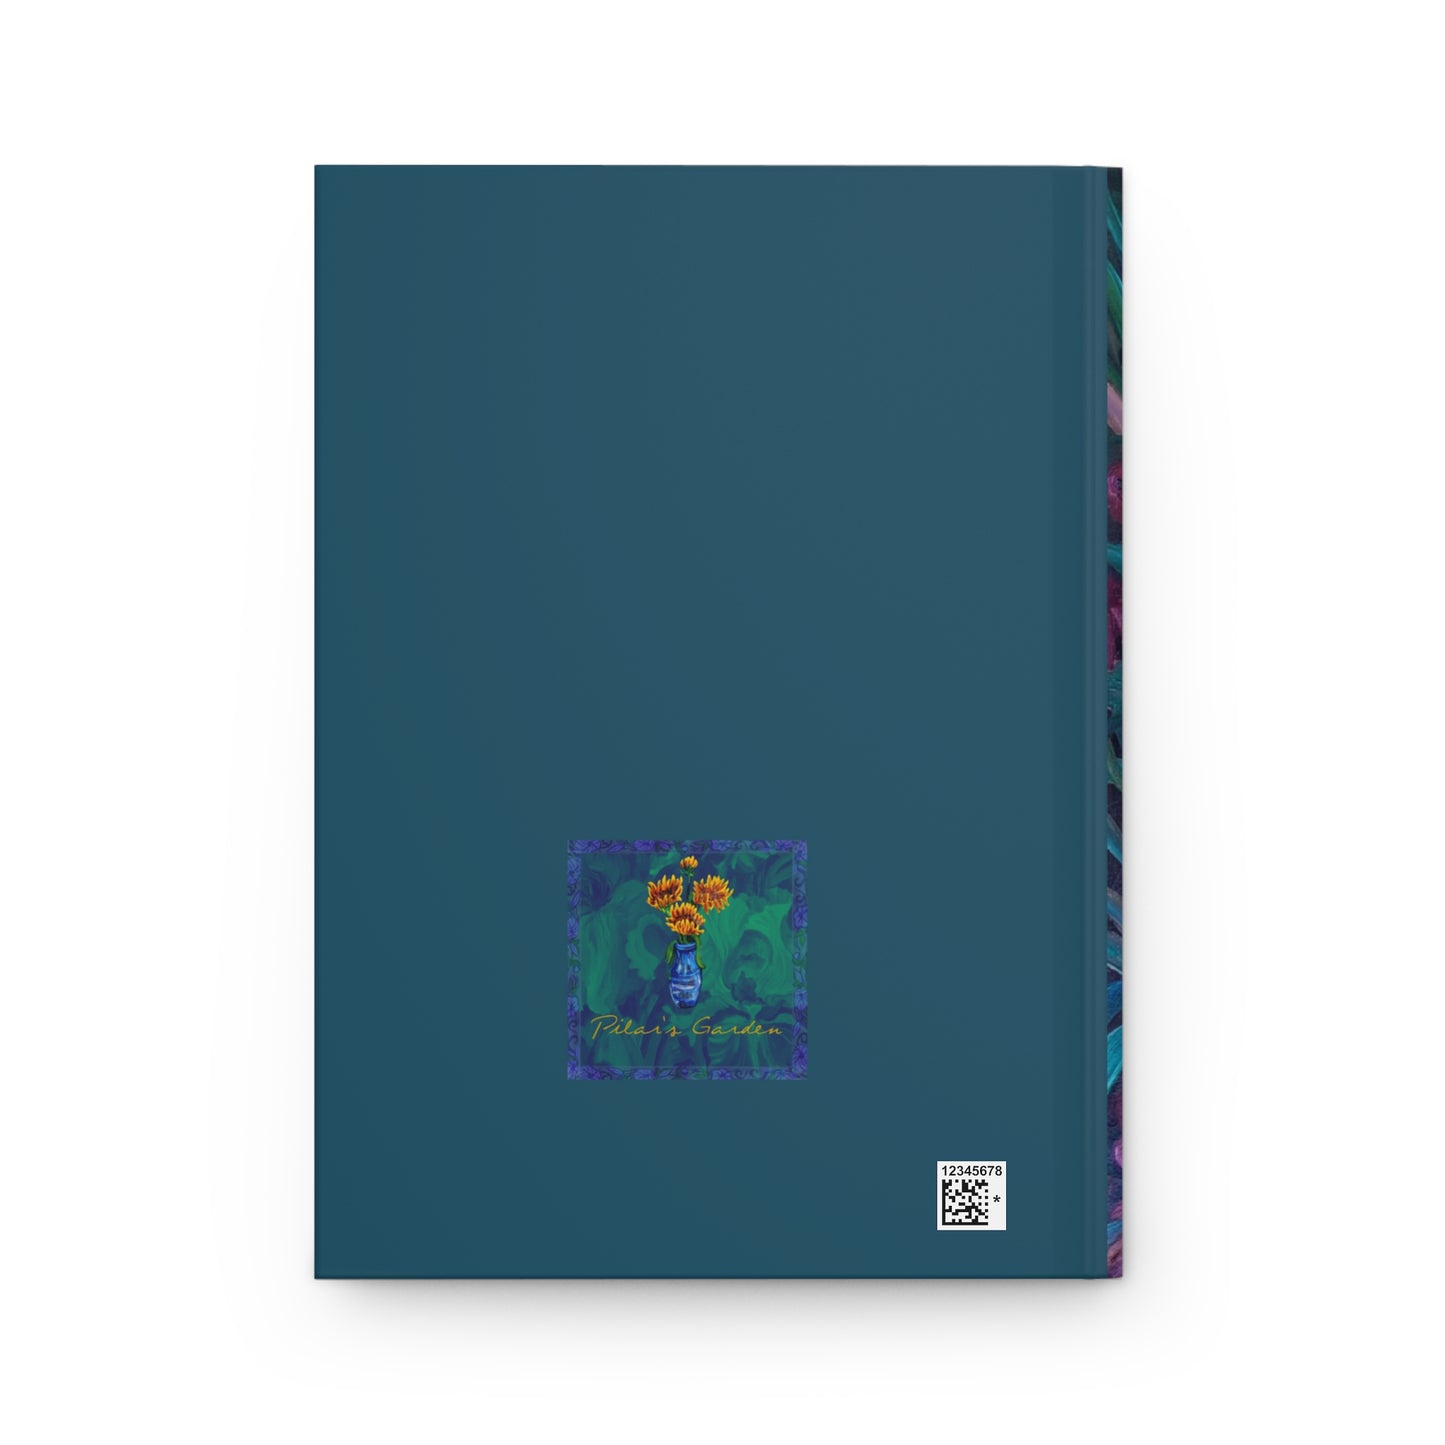 Casebound Journal - "Green Parrot"